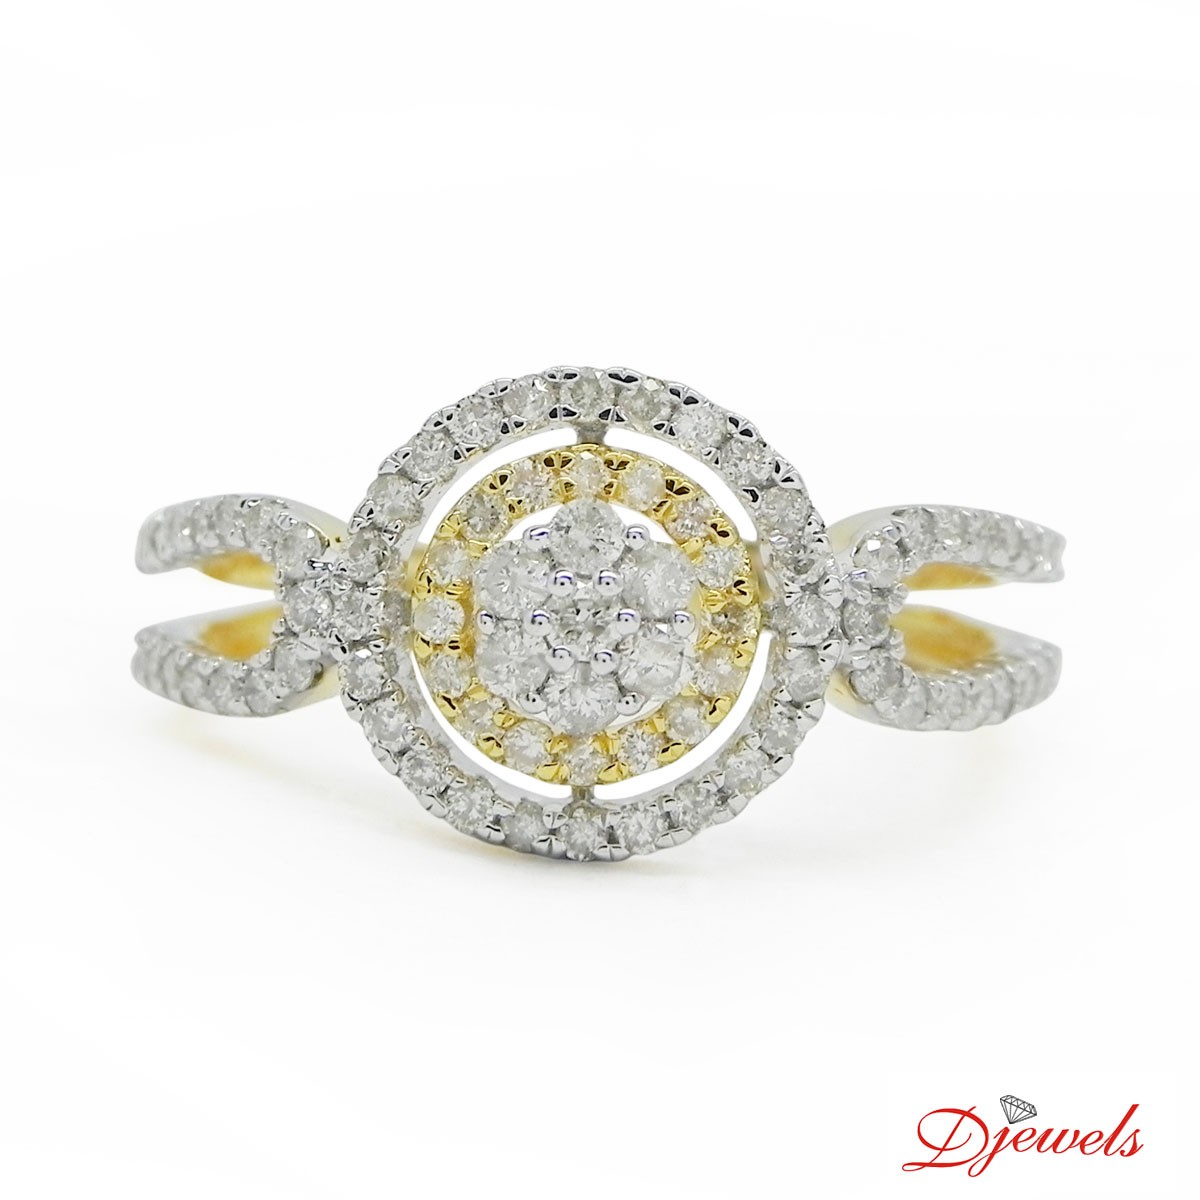 Diamond Ring LuteaFashion and JewelleryDiamond JewelryCentral DelhiKarol Bagh